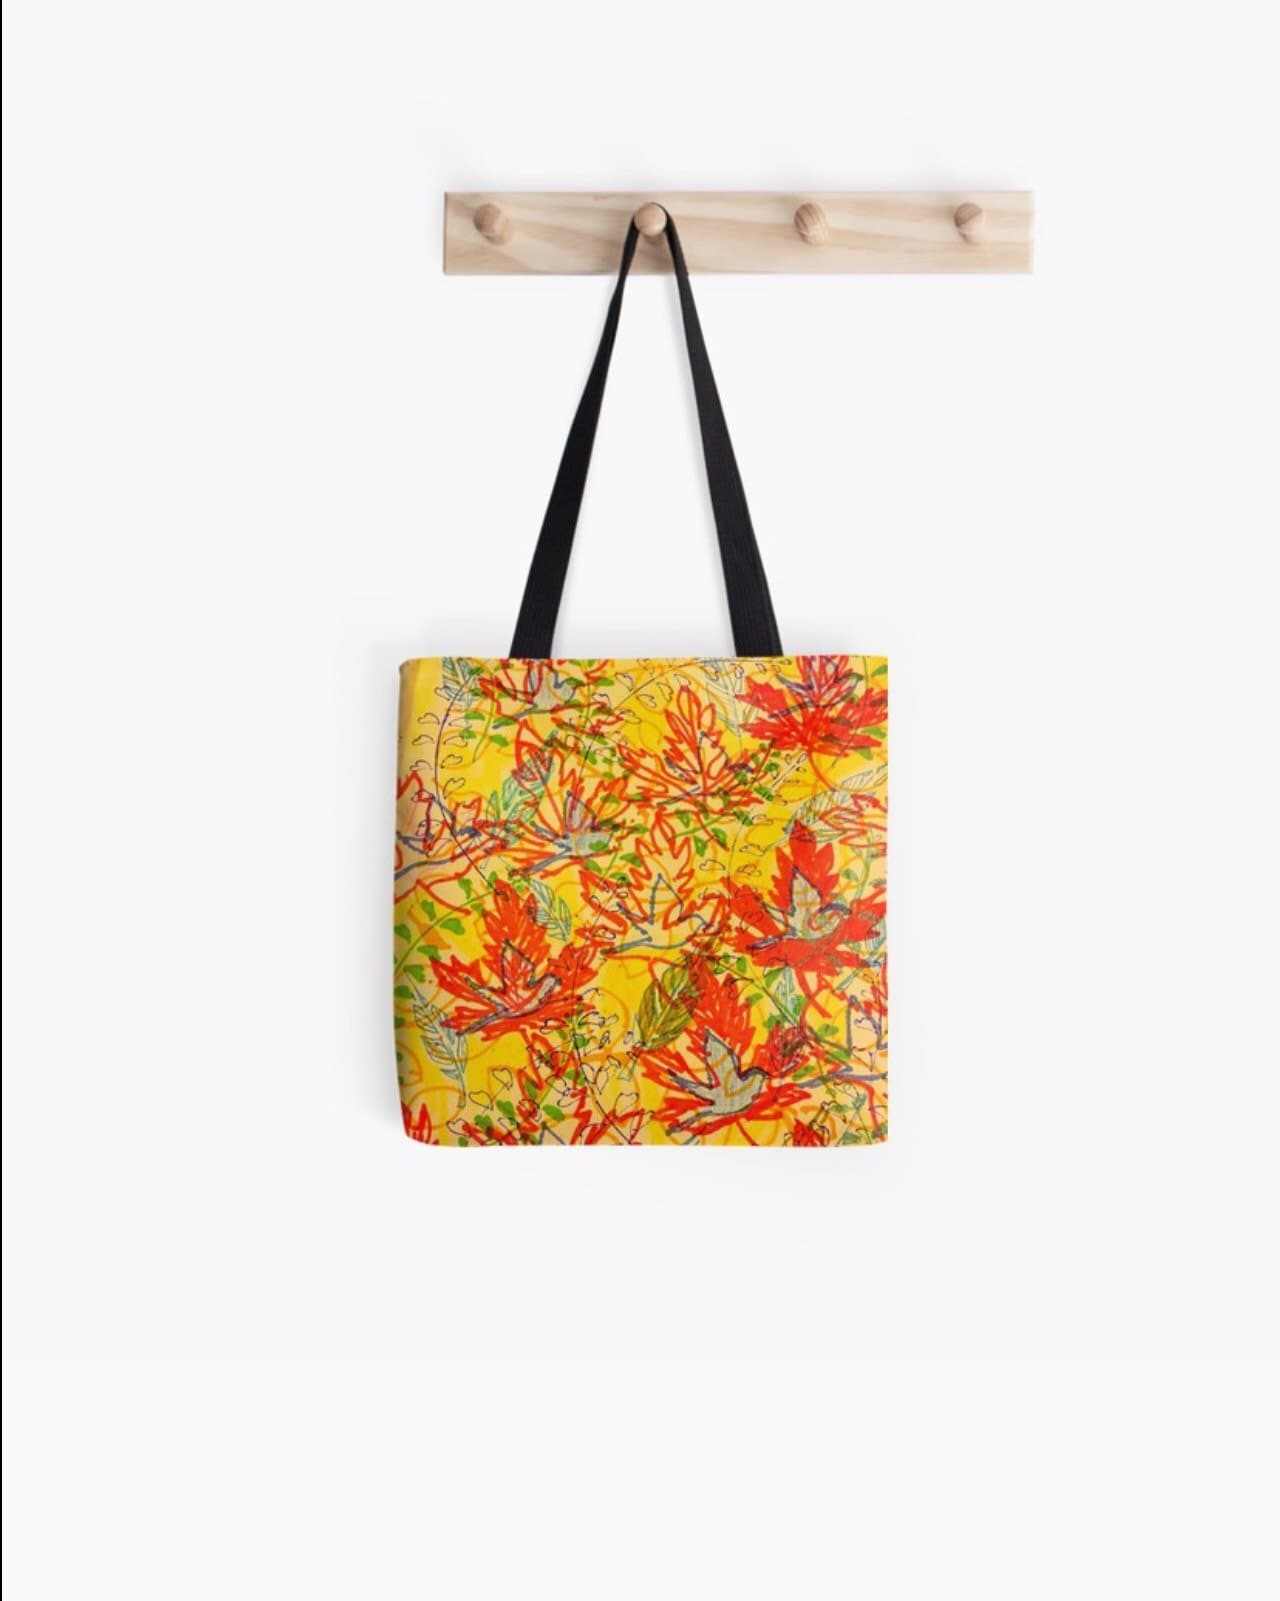 Tote bag grocery shopping bag beach bag